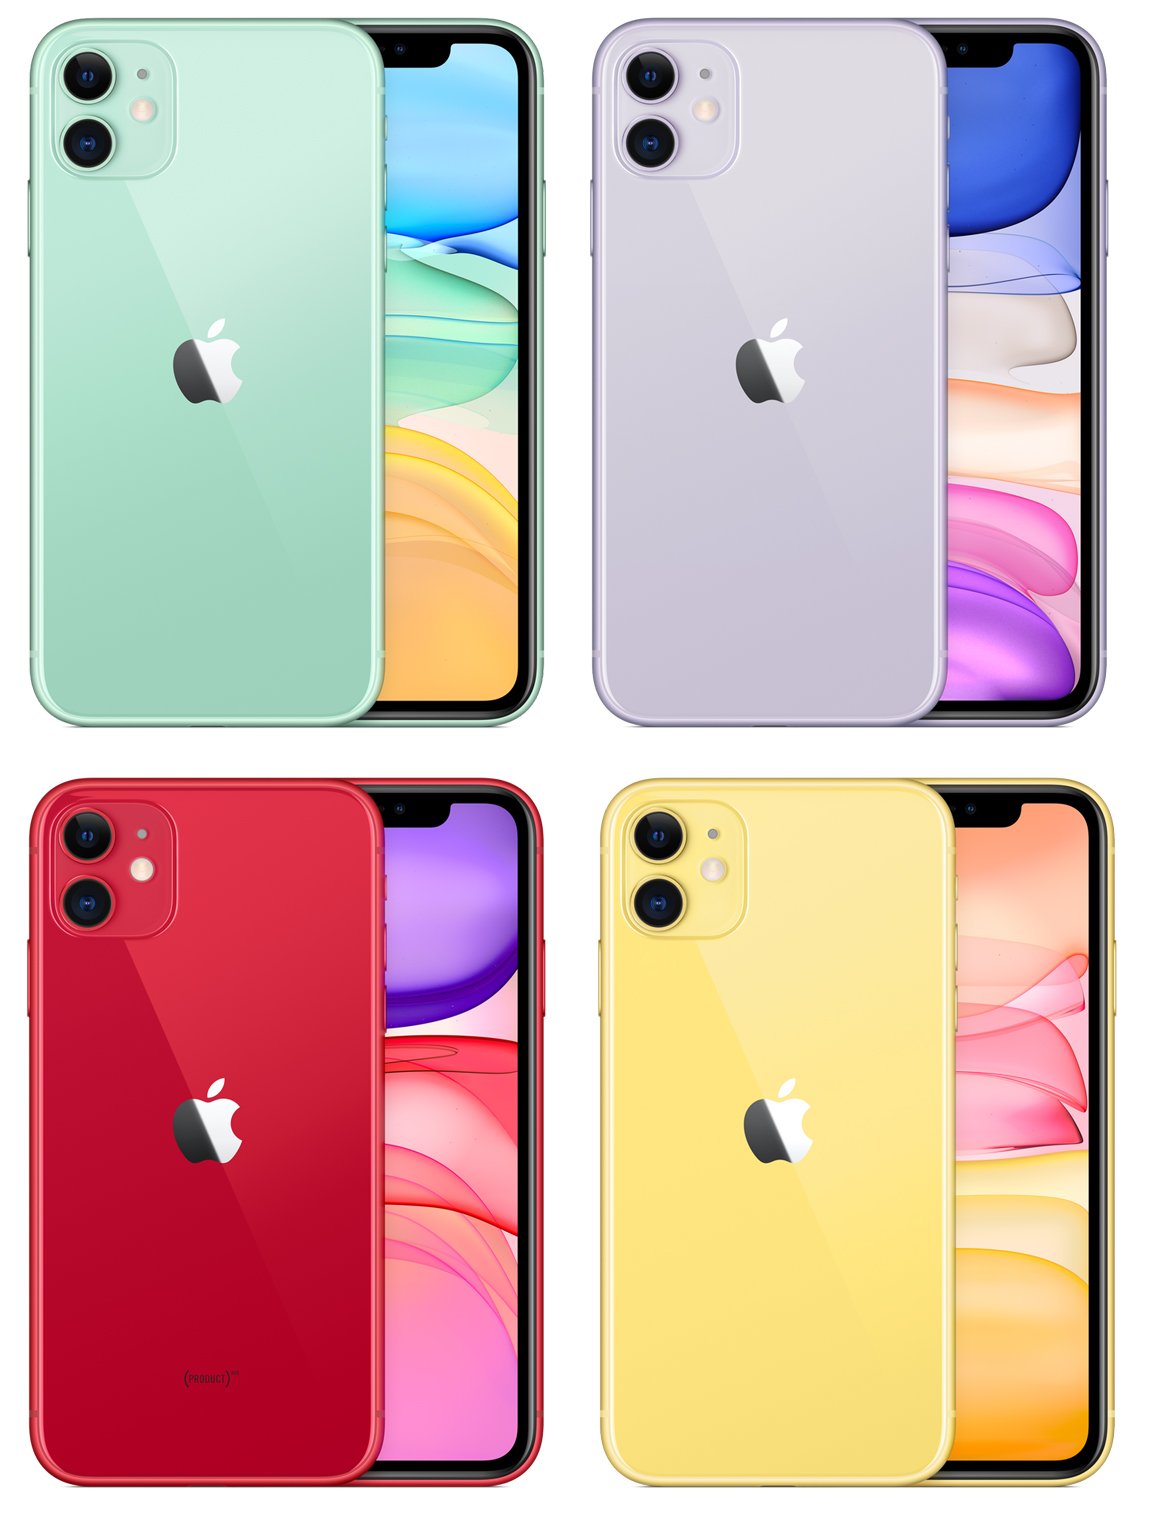 Apple Iphone 11 Specs Review Release Date Phonesdata